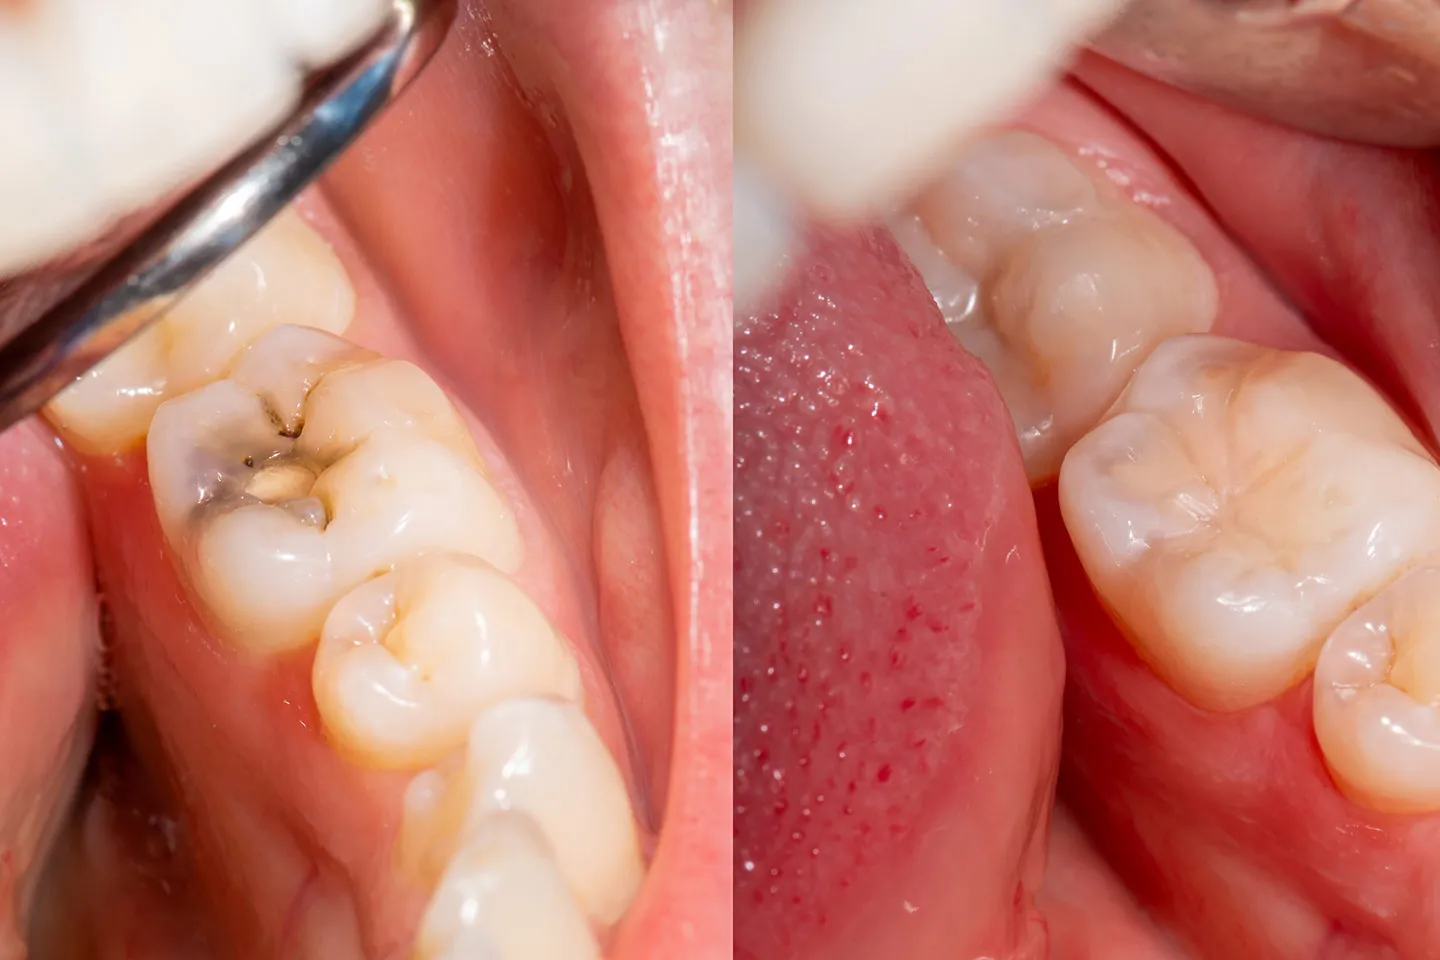 Silver Diamine Fluoride treatments at Spring Field Dental